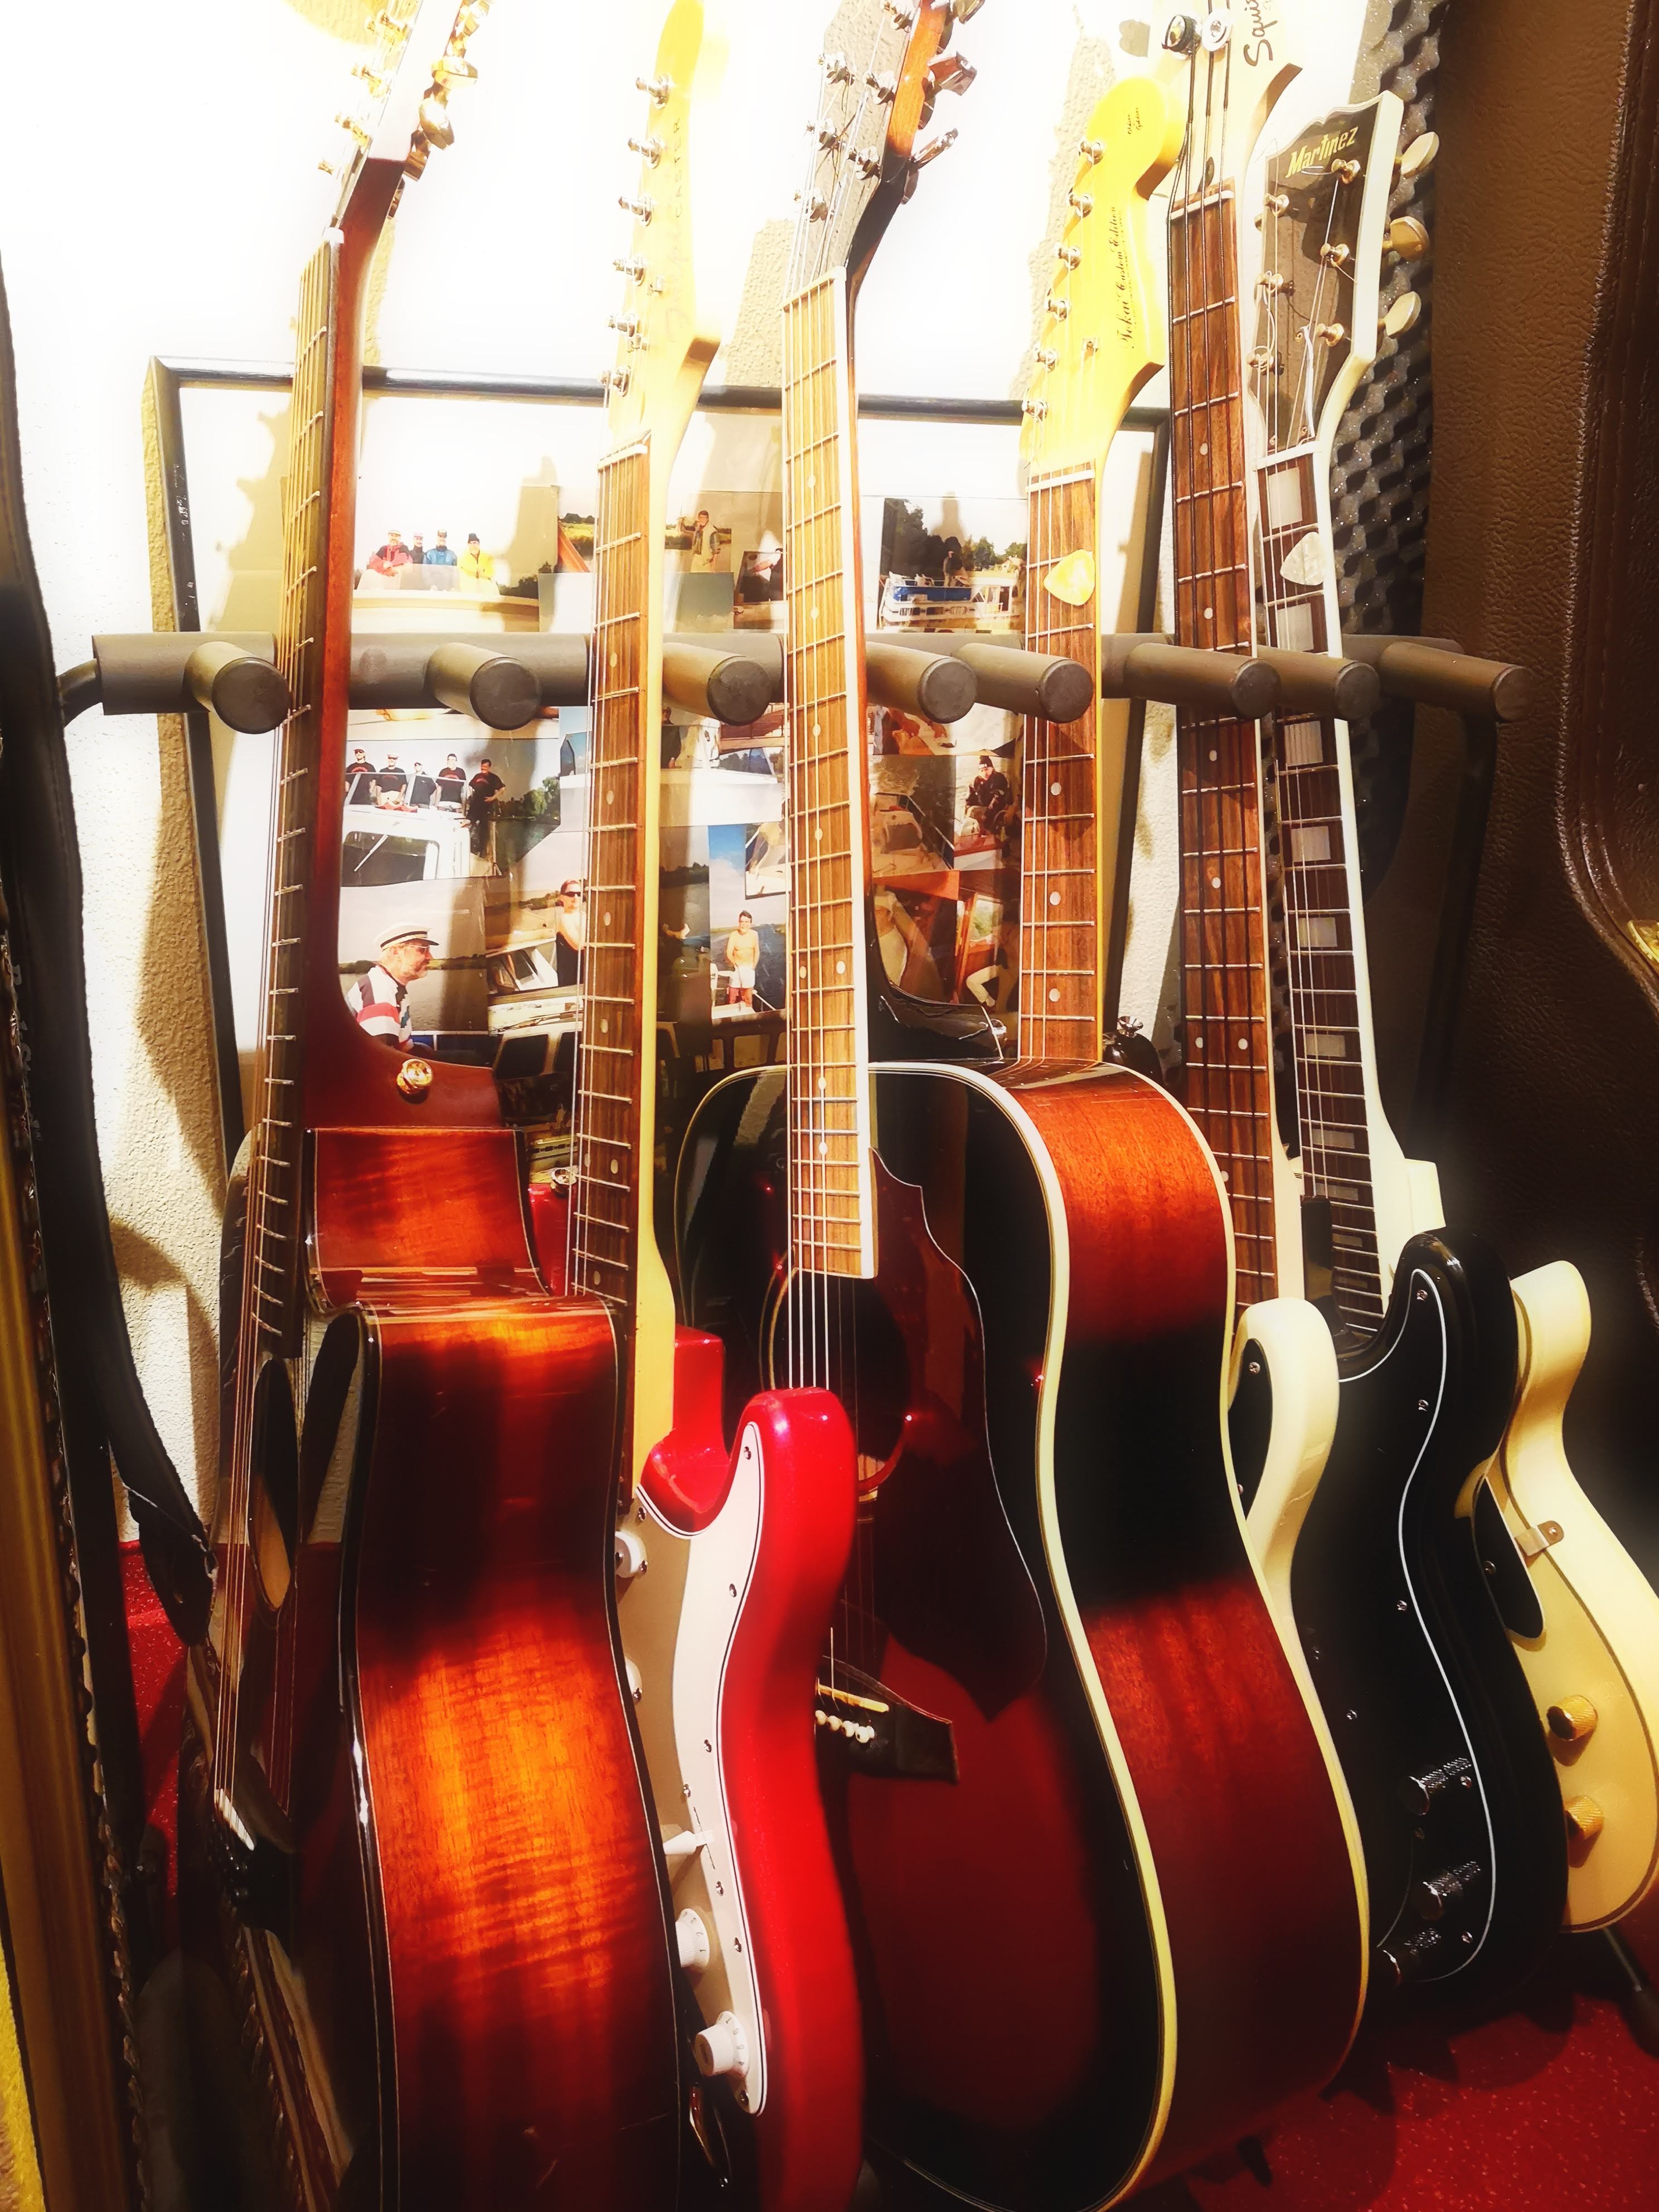 ...some Guitars